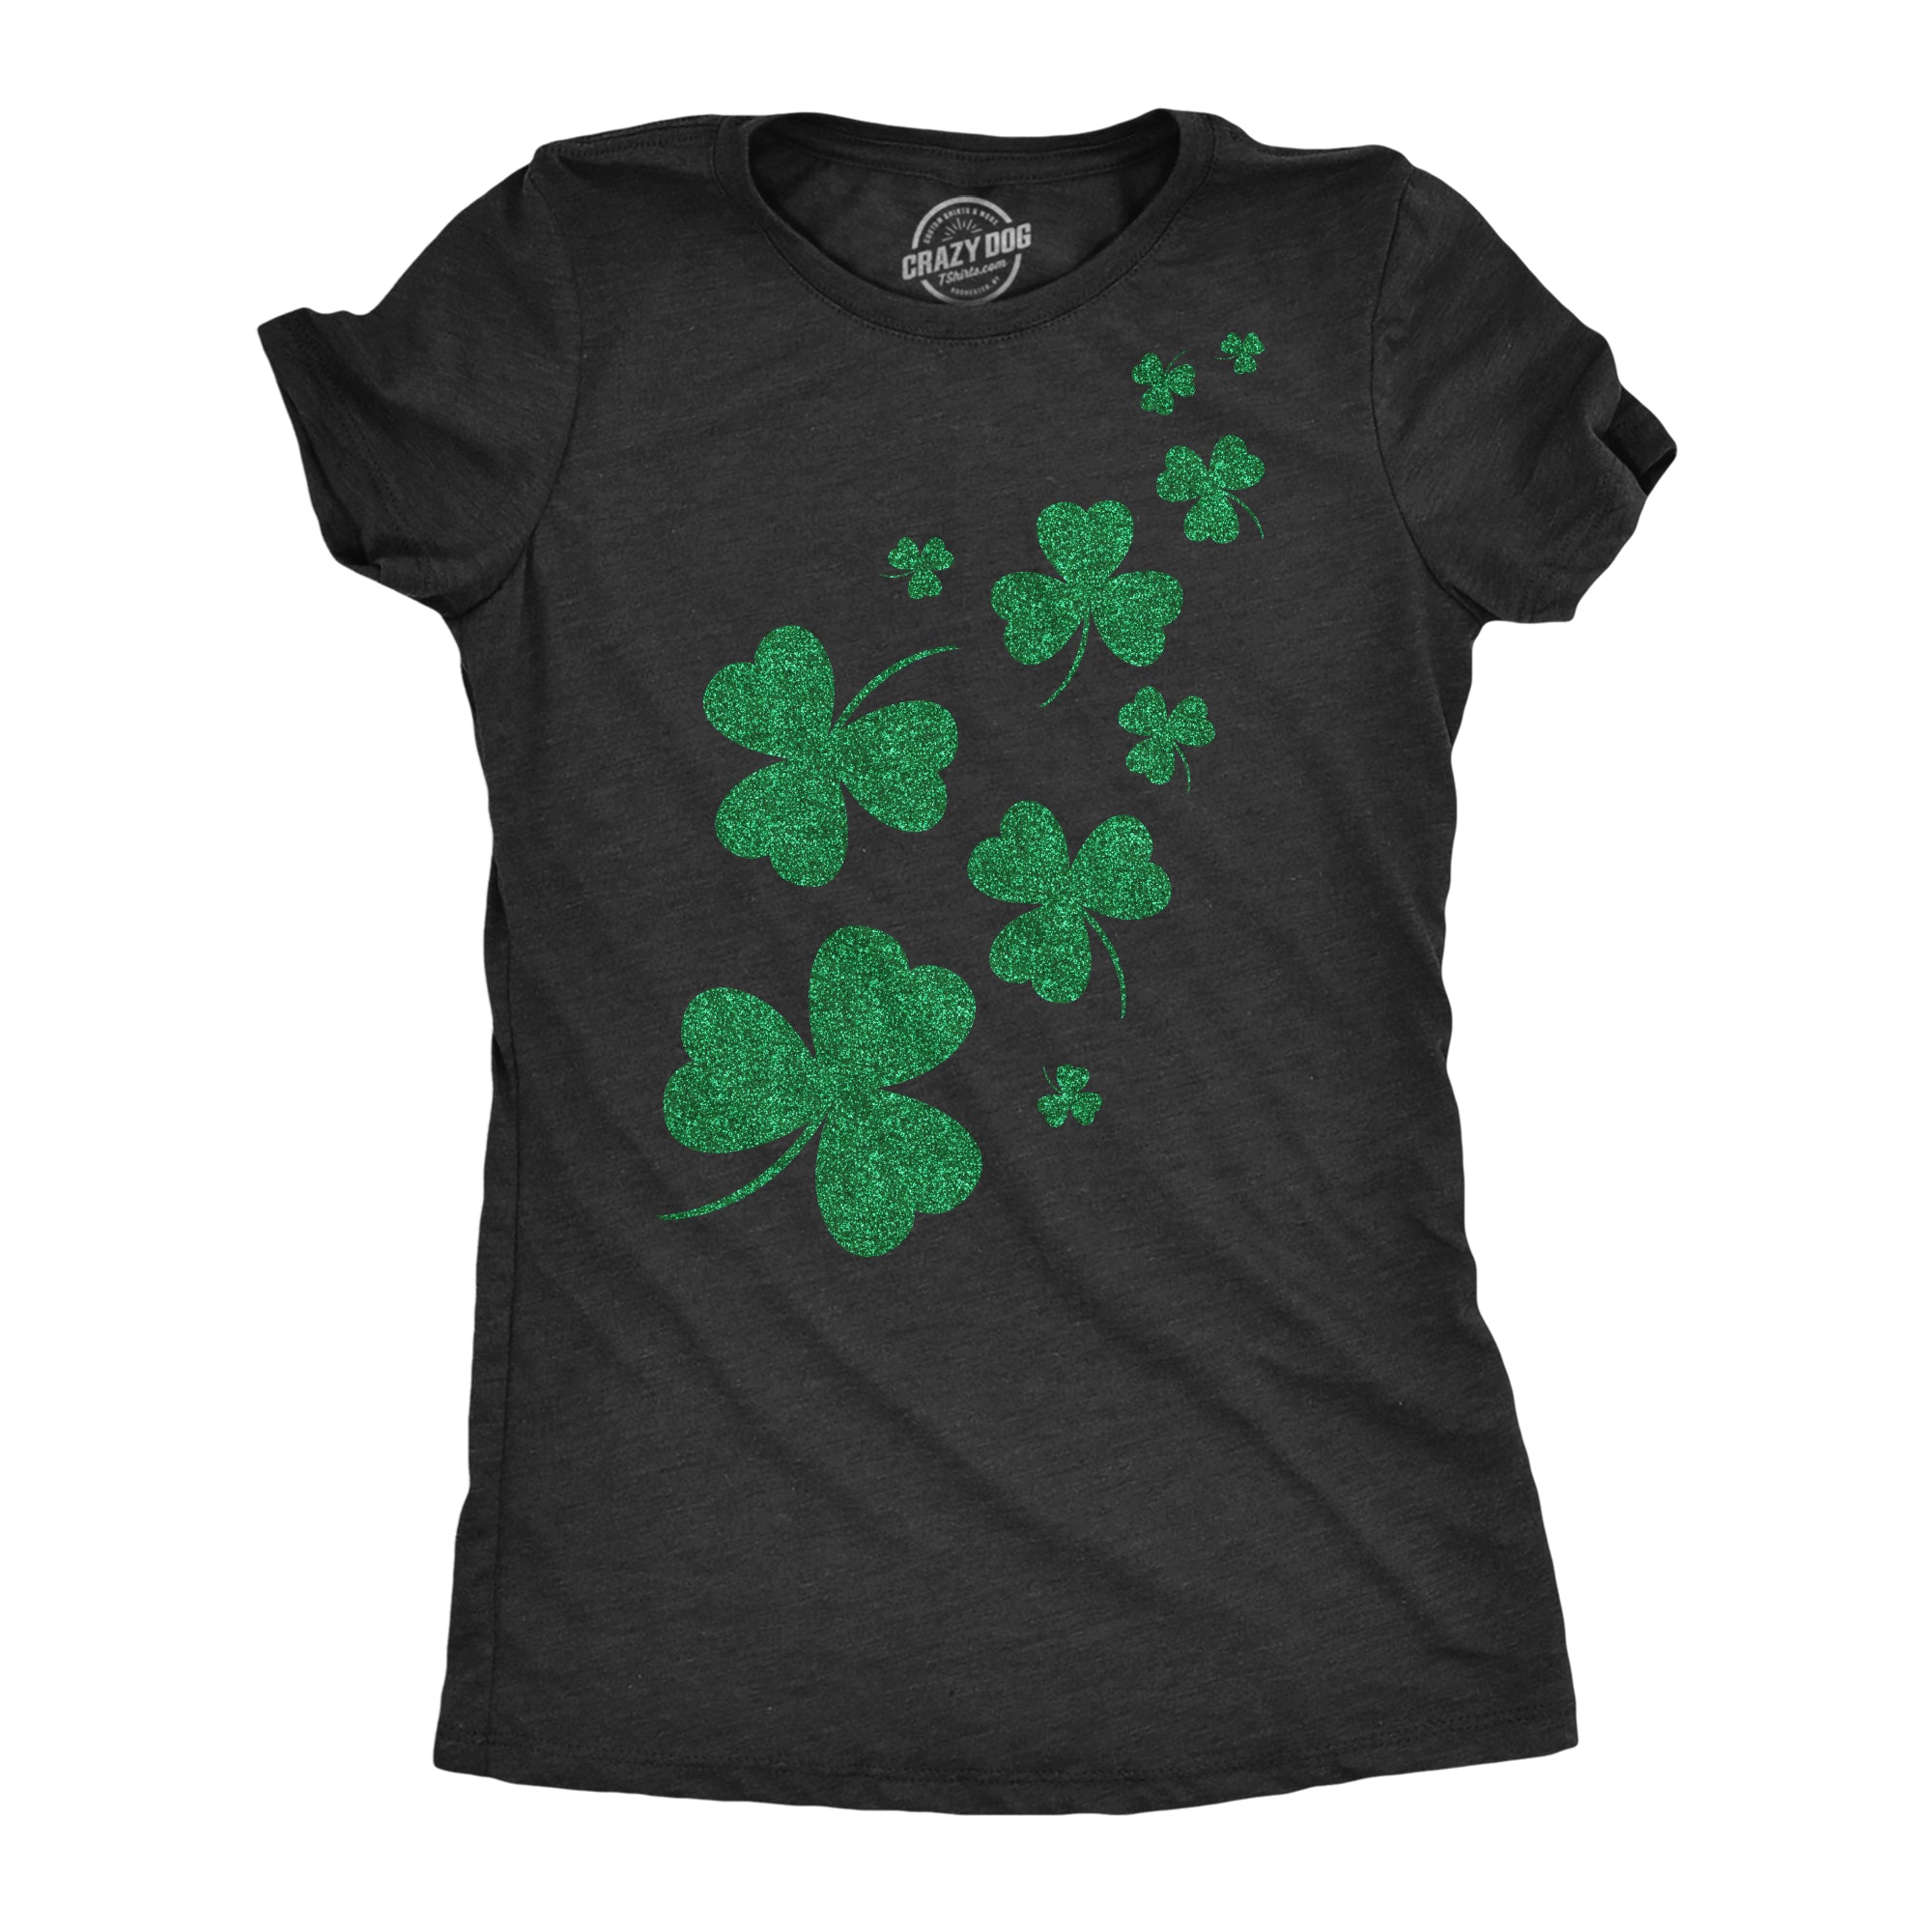 Funny Heather Black Glitter Shamrocks Womens T Shirt Nerdy Saint Patrick's Day Beer Tee